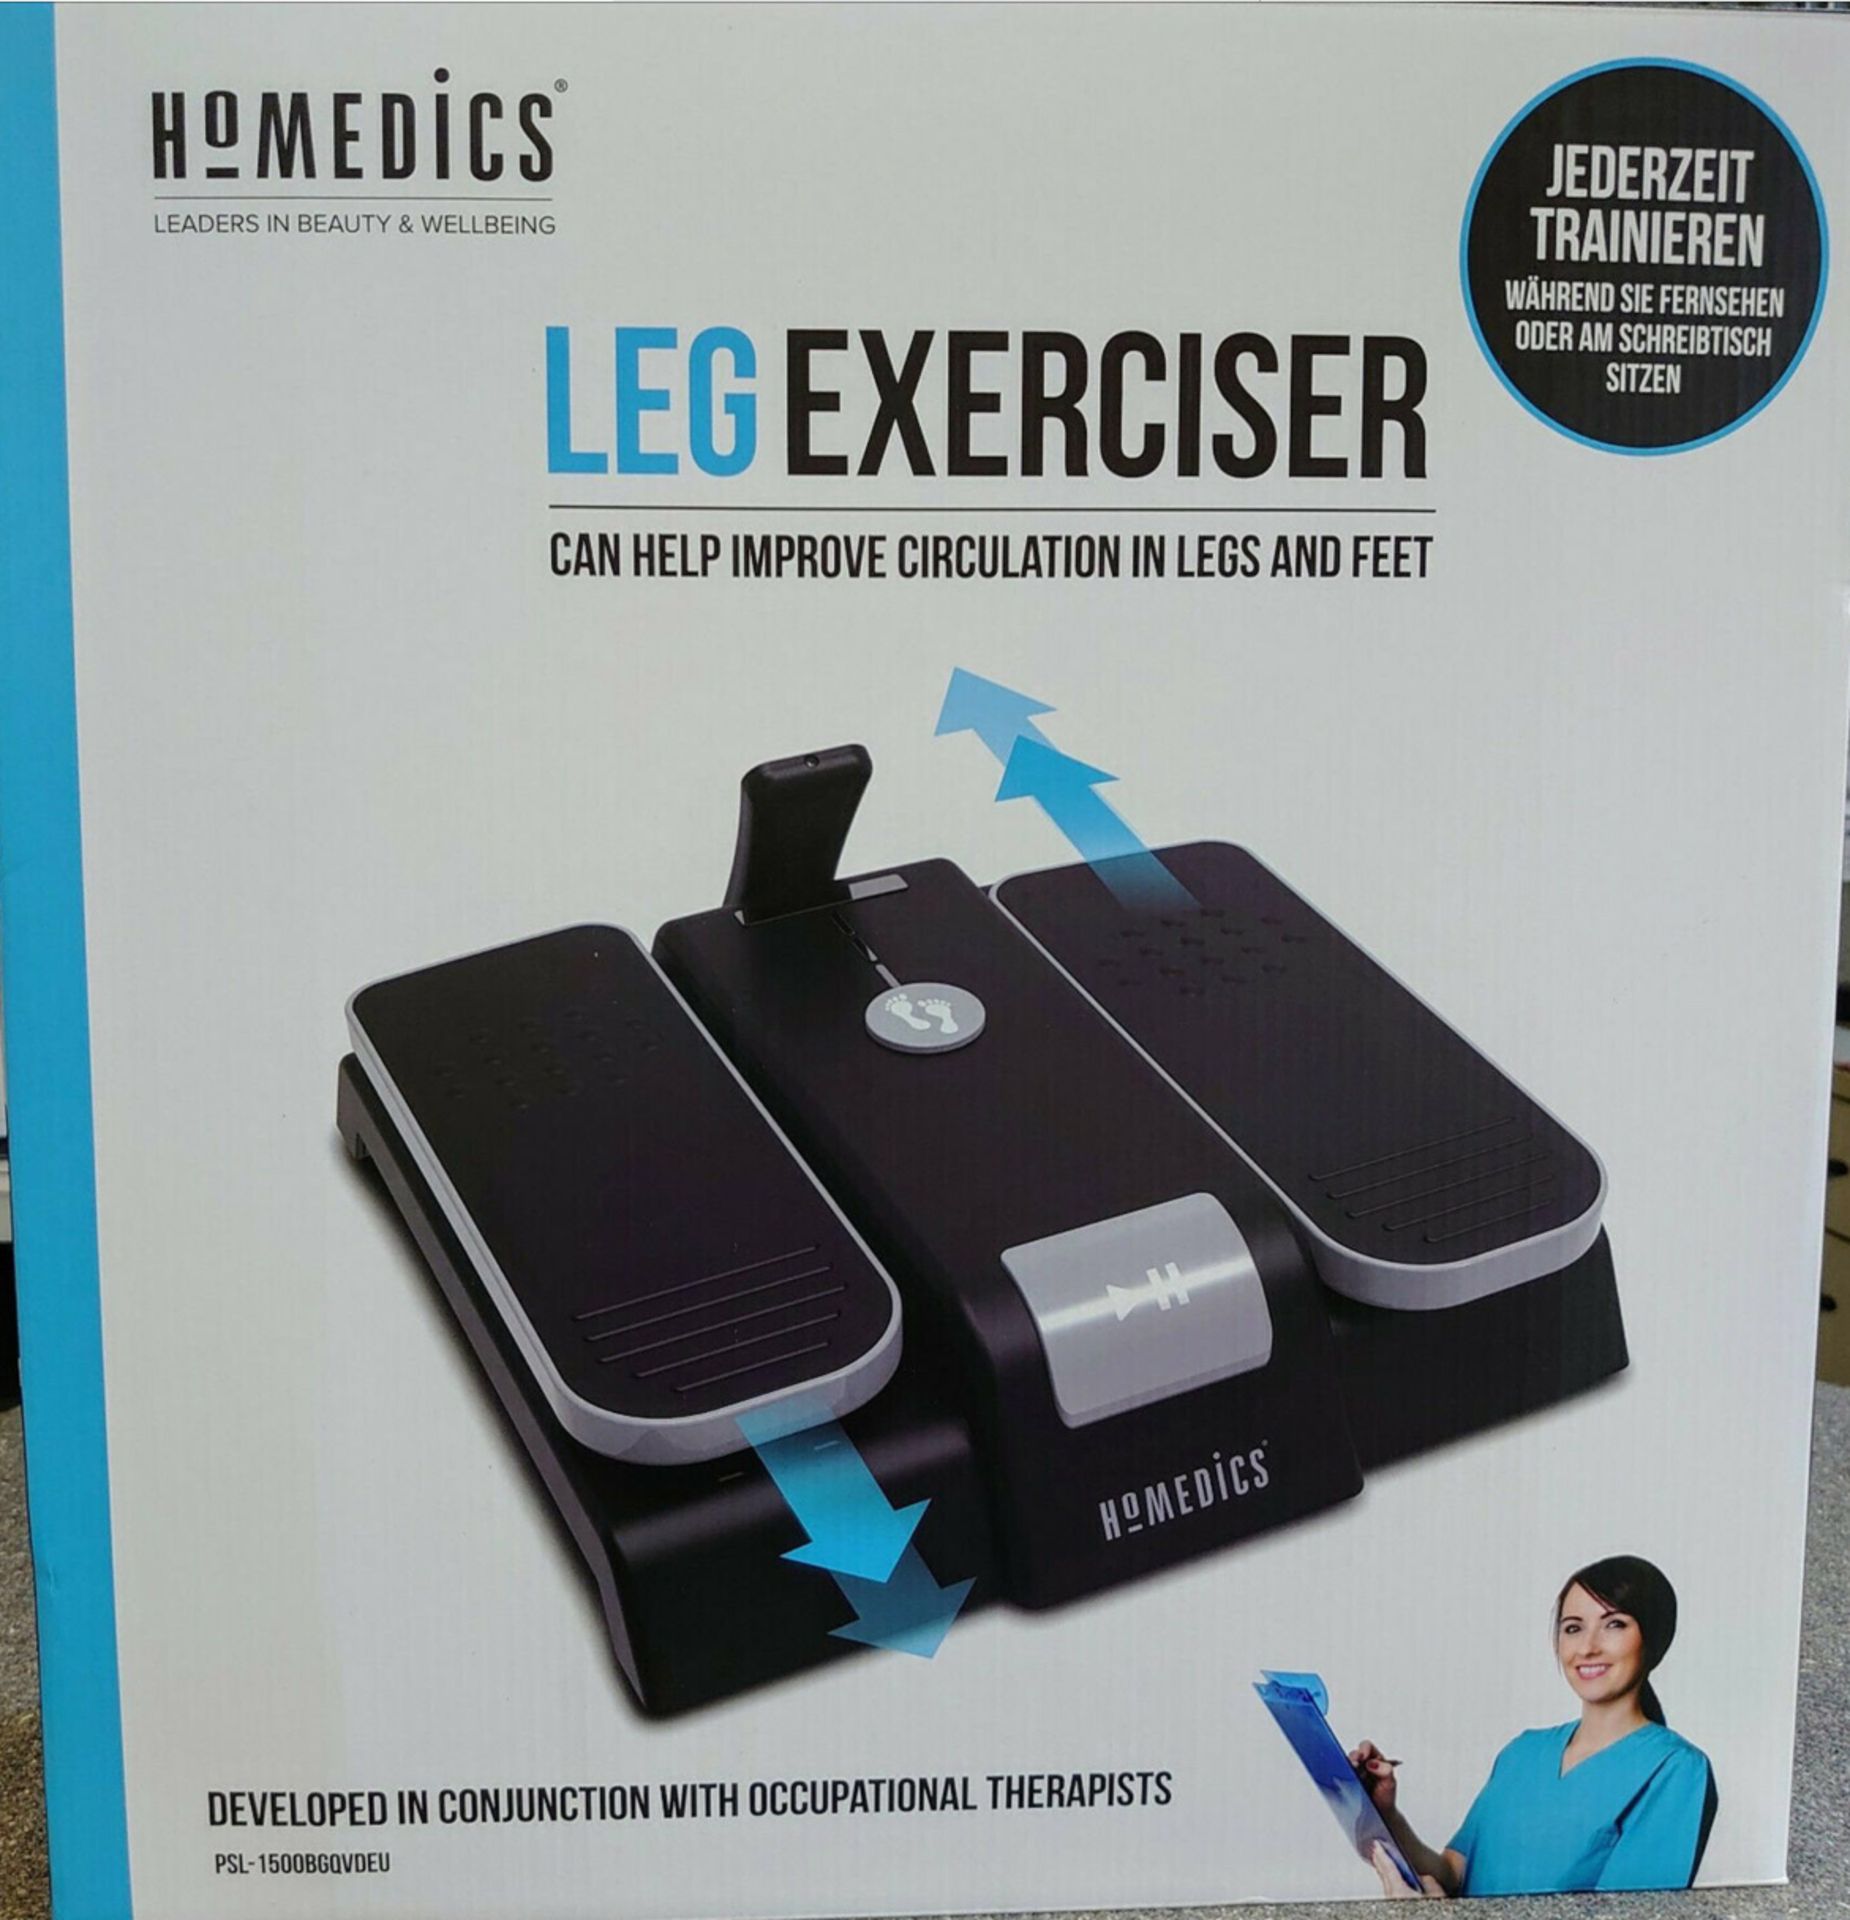 NEW BOXED - HoMedics Leg Exerciser - Improve Circulation & Mobility, Reduce Joint Discomfort,